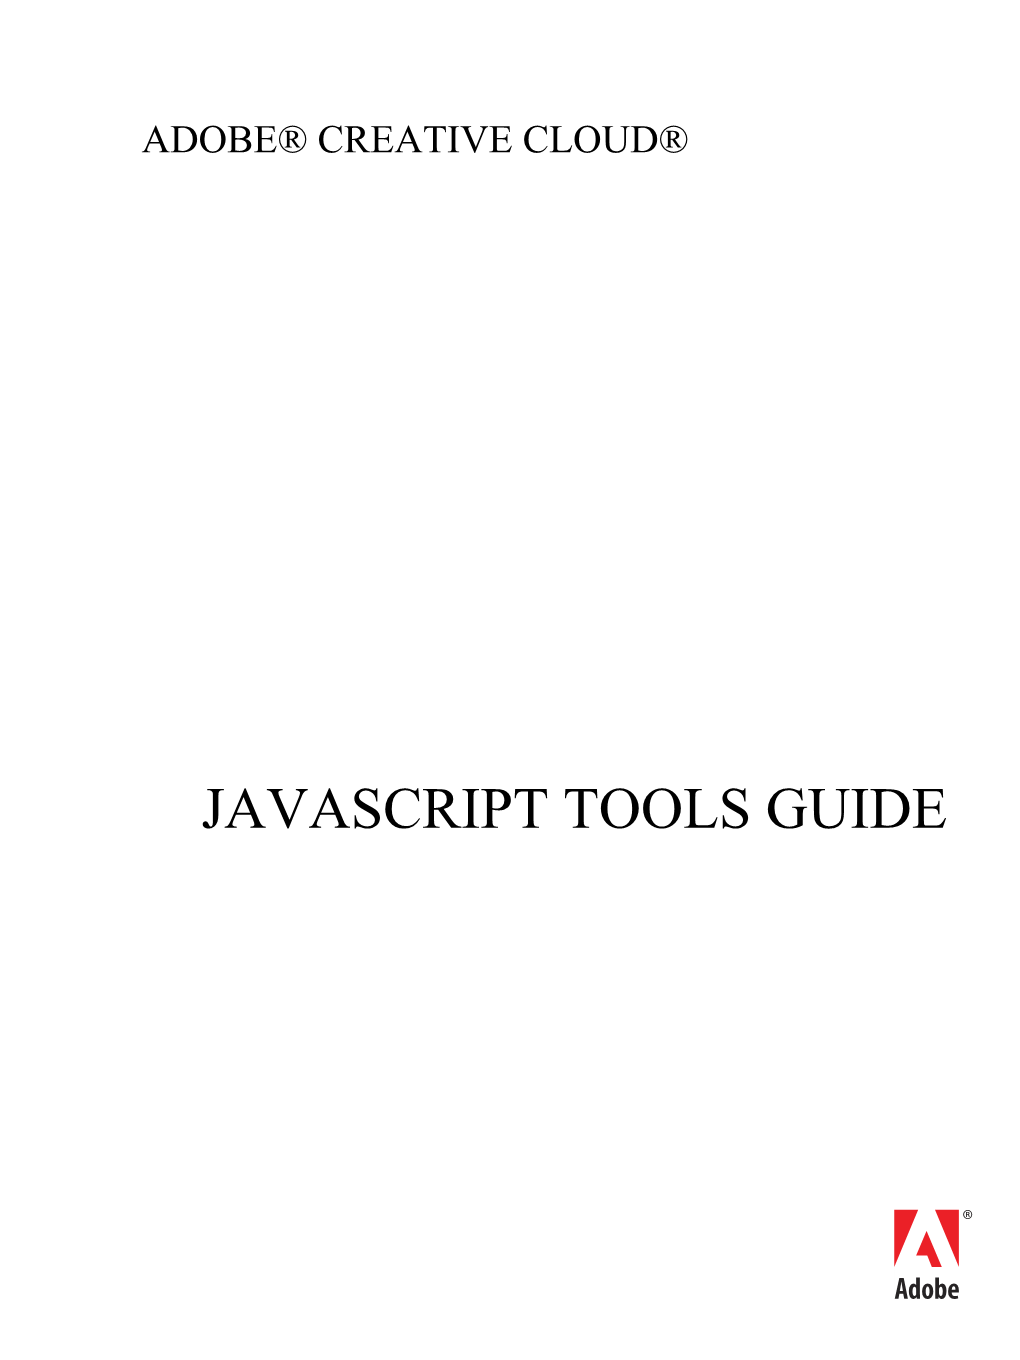 Javascript-Tools-Guide-CC.Pdf